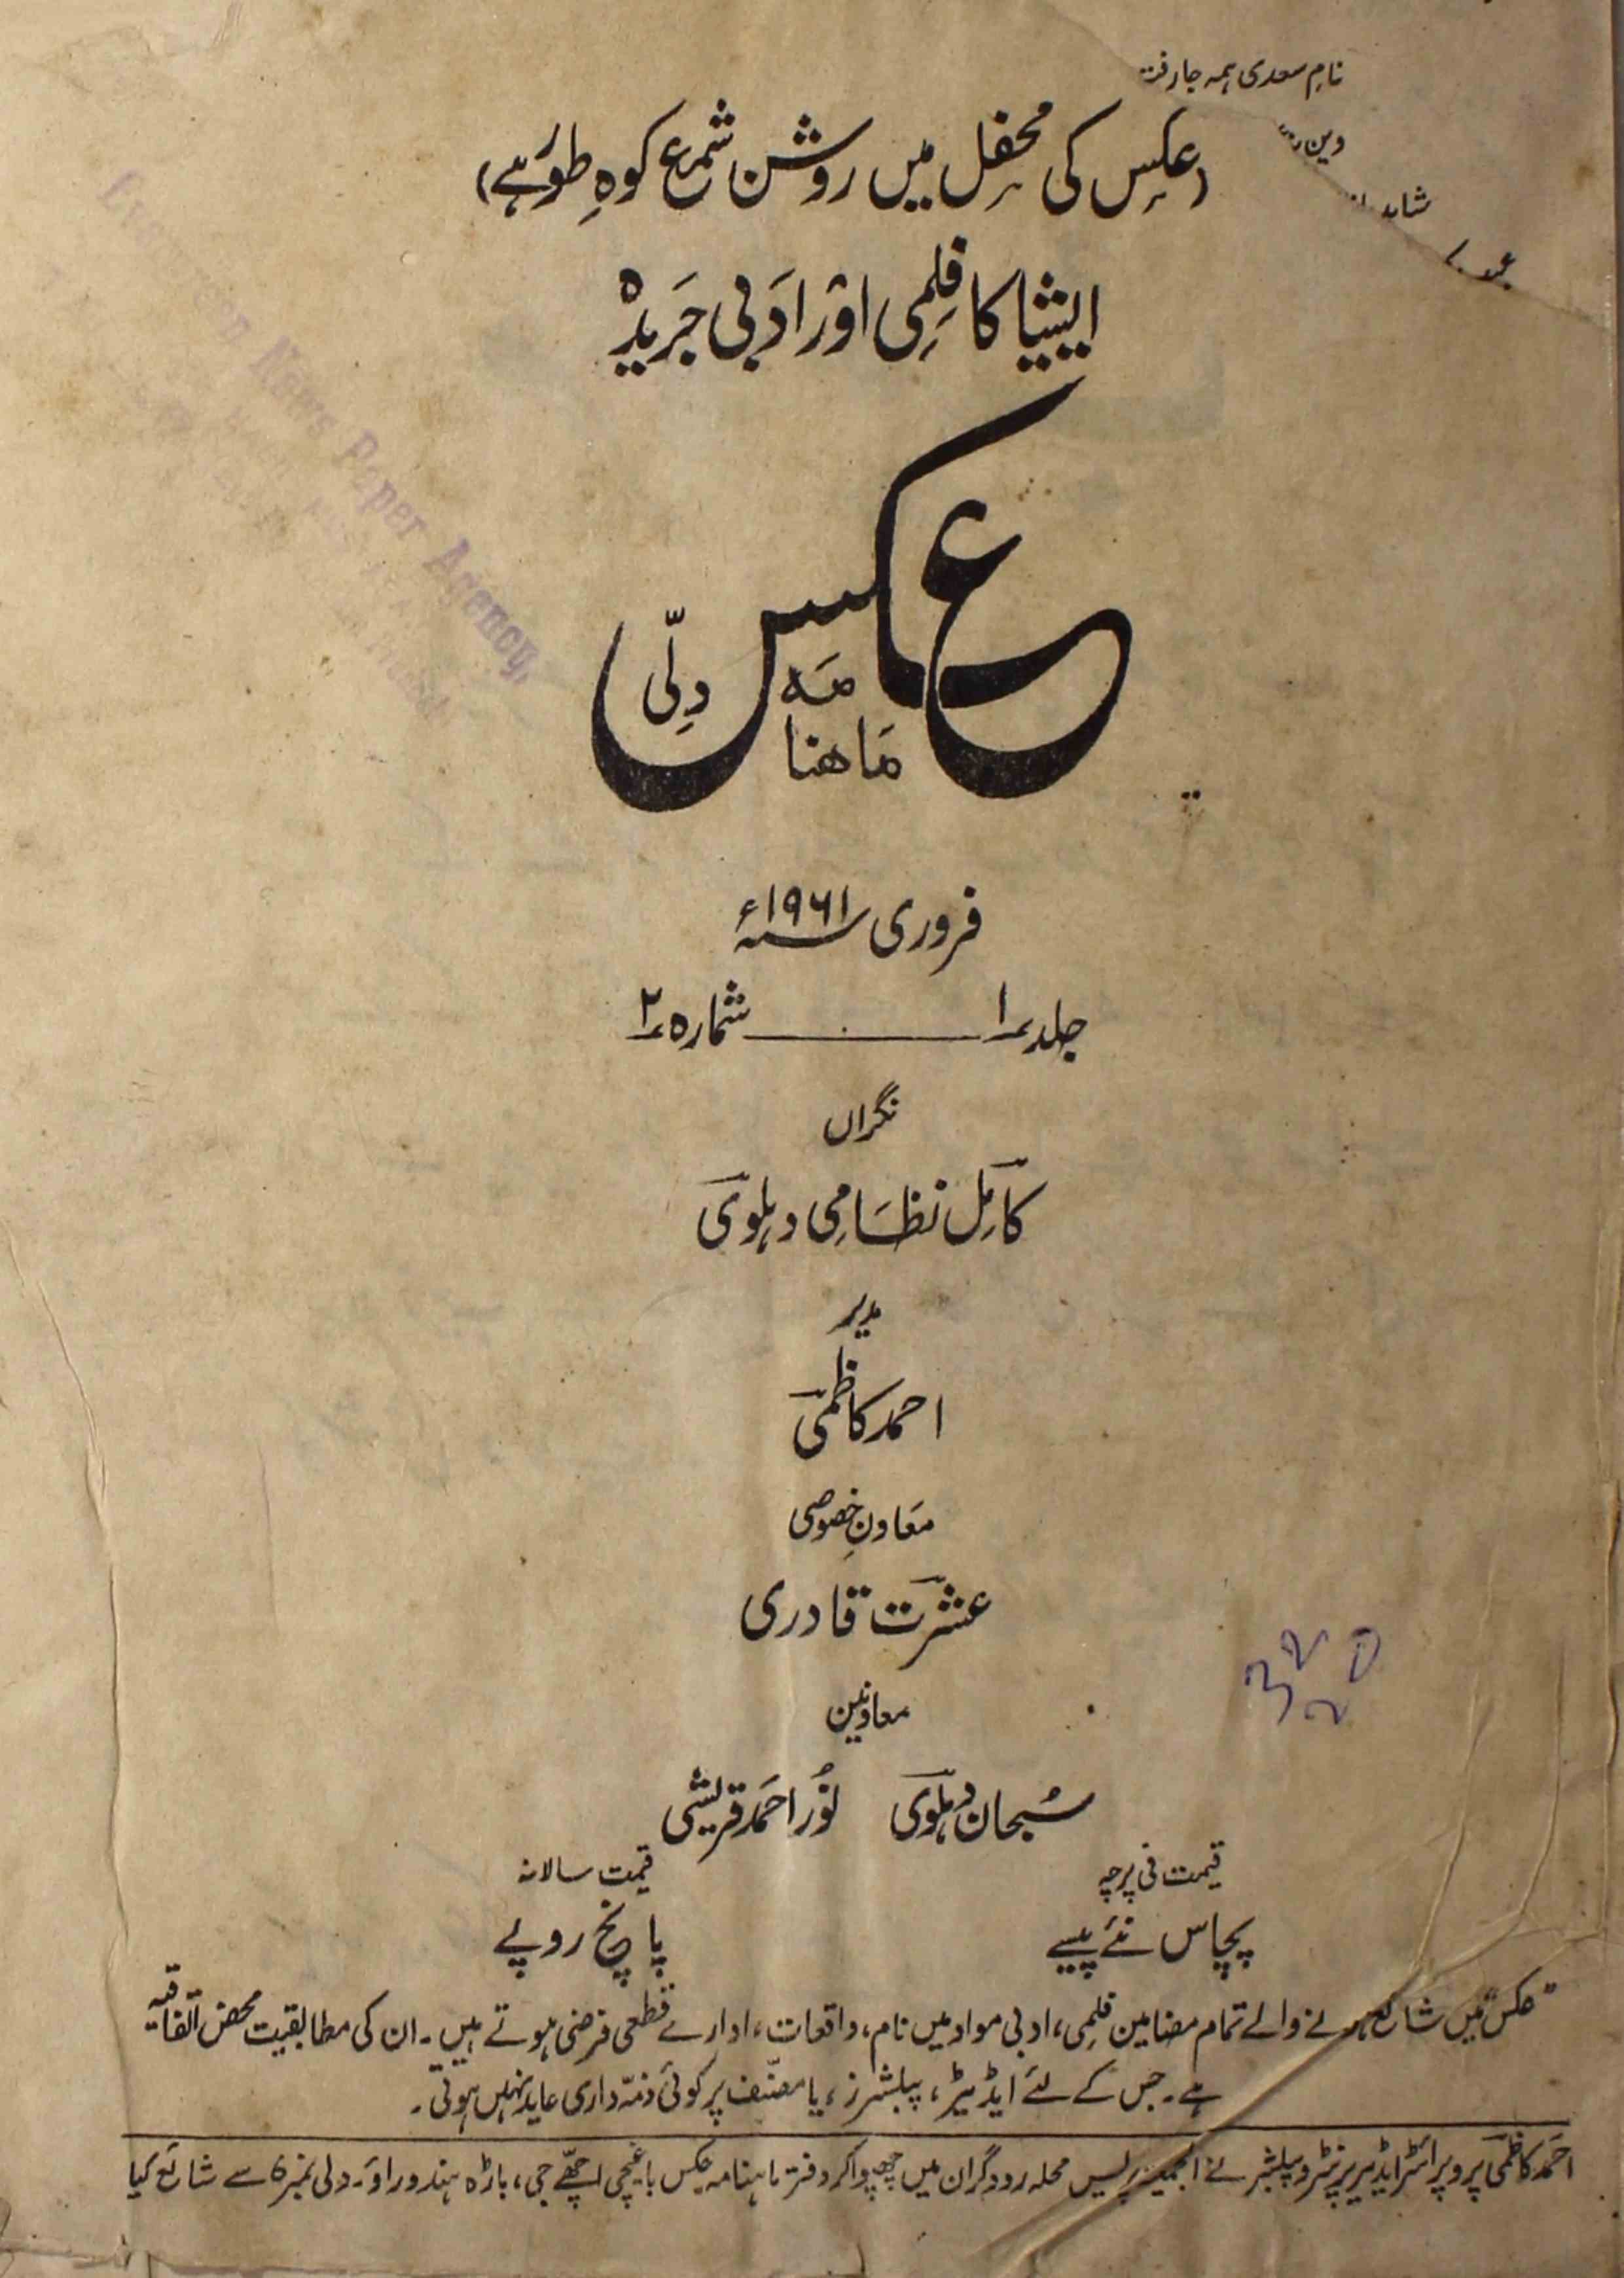 Aks Jild 1 No 2 February 1961-Svk-Shumara Number-002